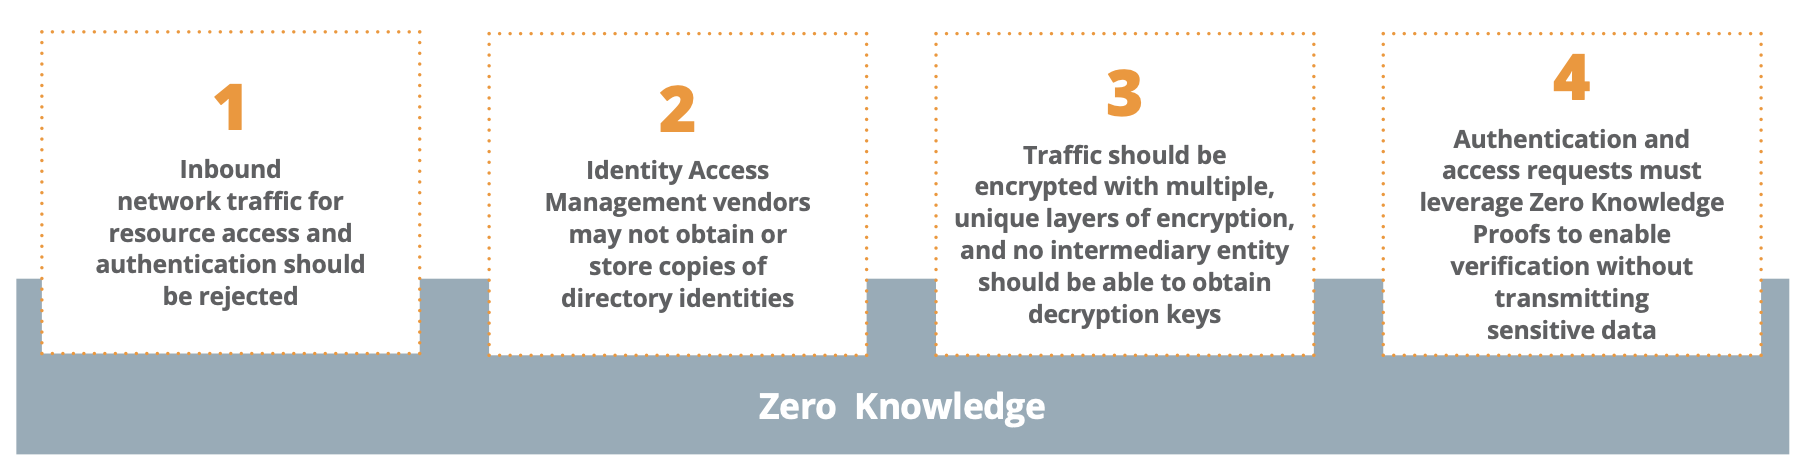 Zero Knowledge Networking Tenets